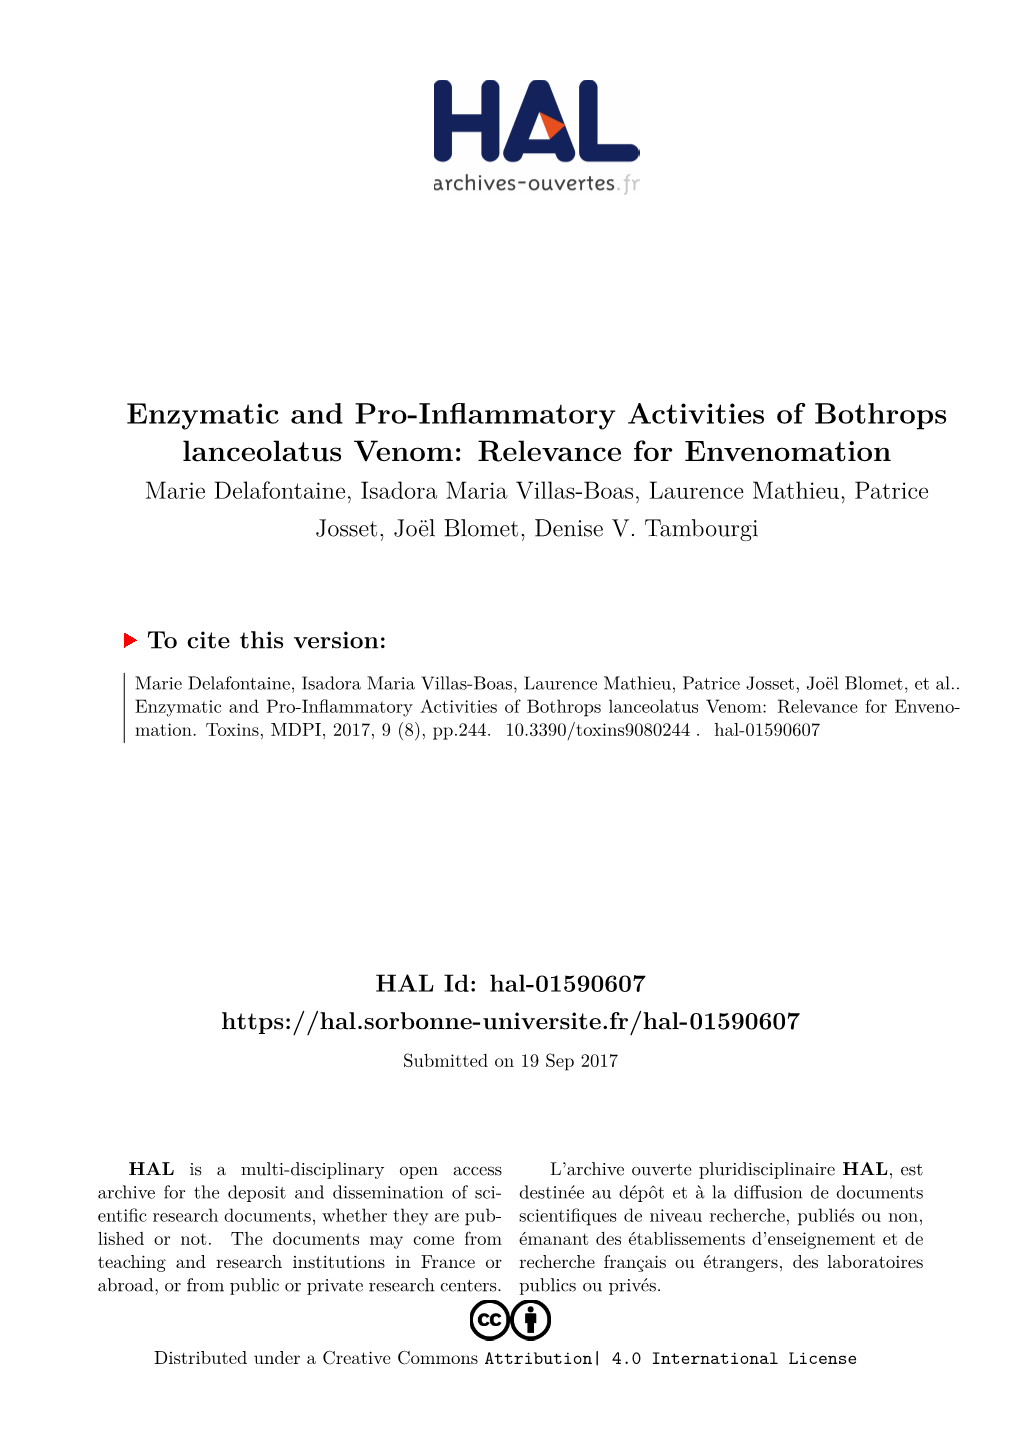 Enzymatic and Pro-Inflammatory Activities of Bothrops Lanceolatus